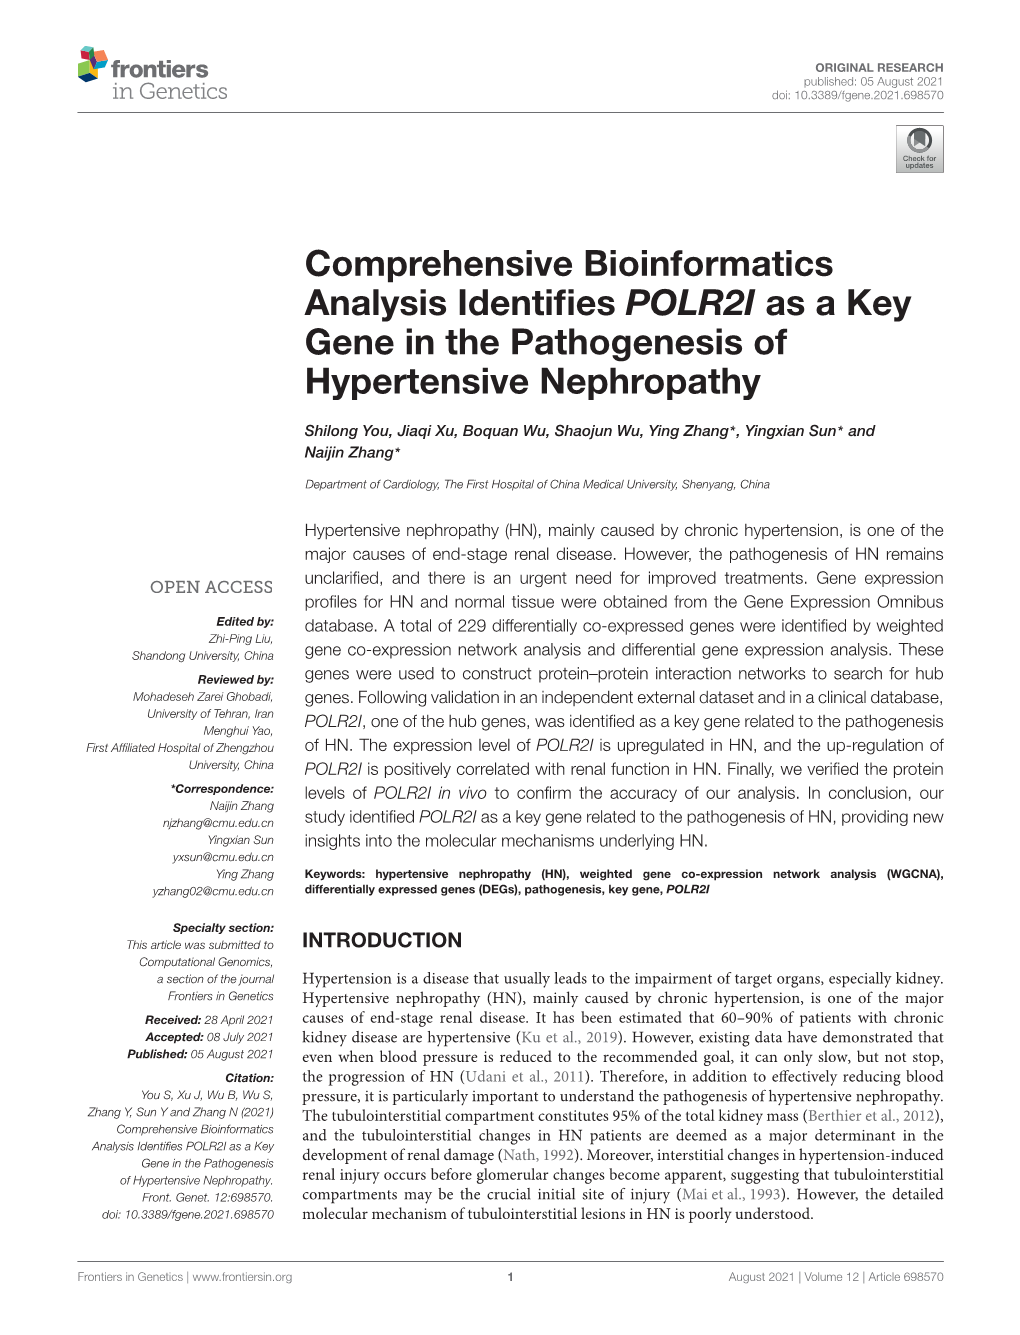 Comprehensive Bioinformatics Analysis Identifies POLR2I As a Key